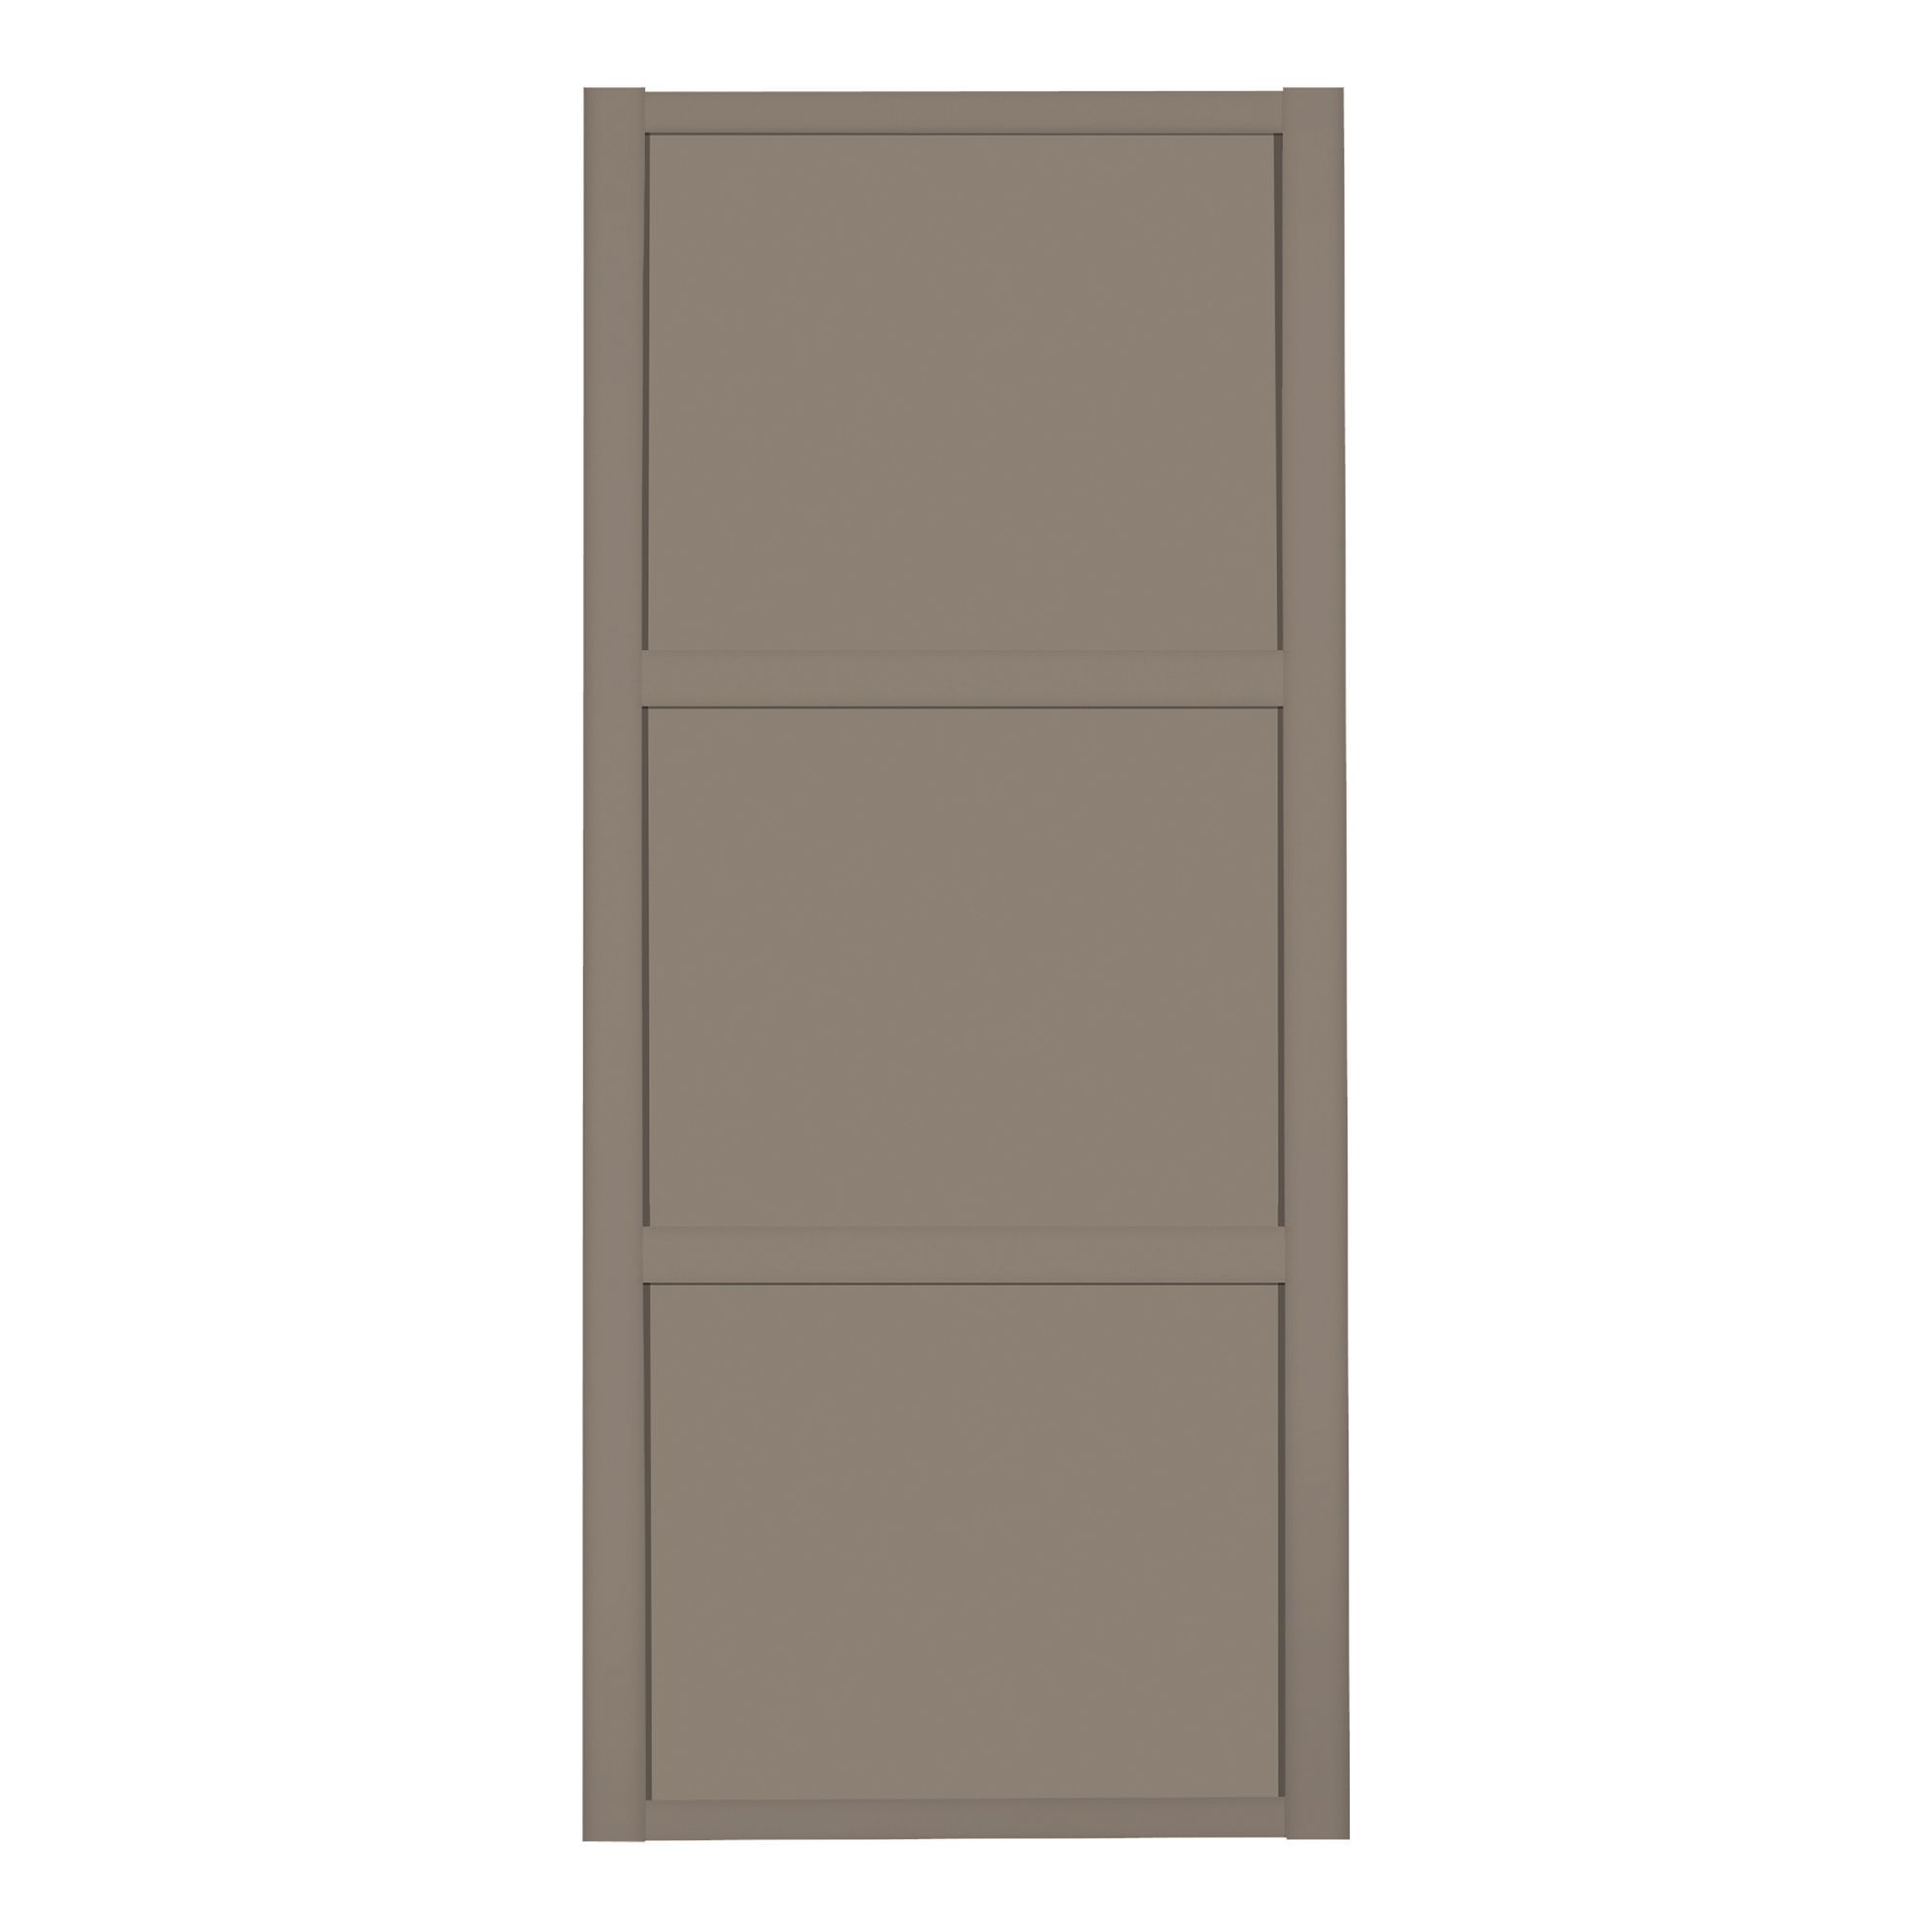 Spacepro Shaker Stone grey 3 panel Sliding wardrobe door x (W) 914mm